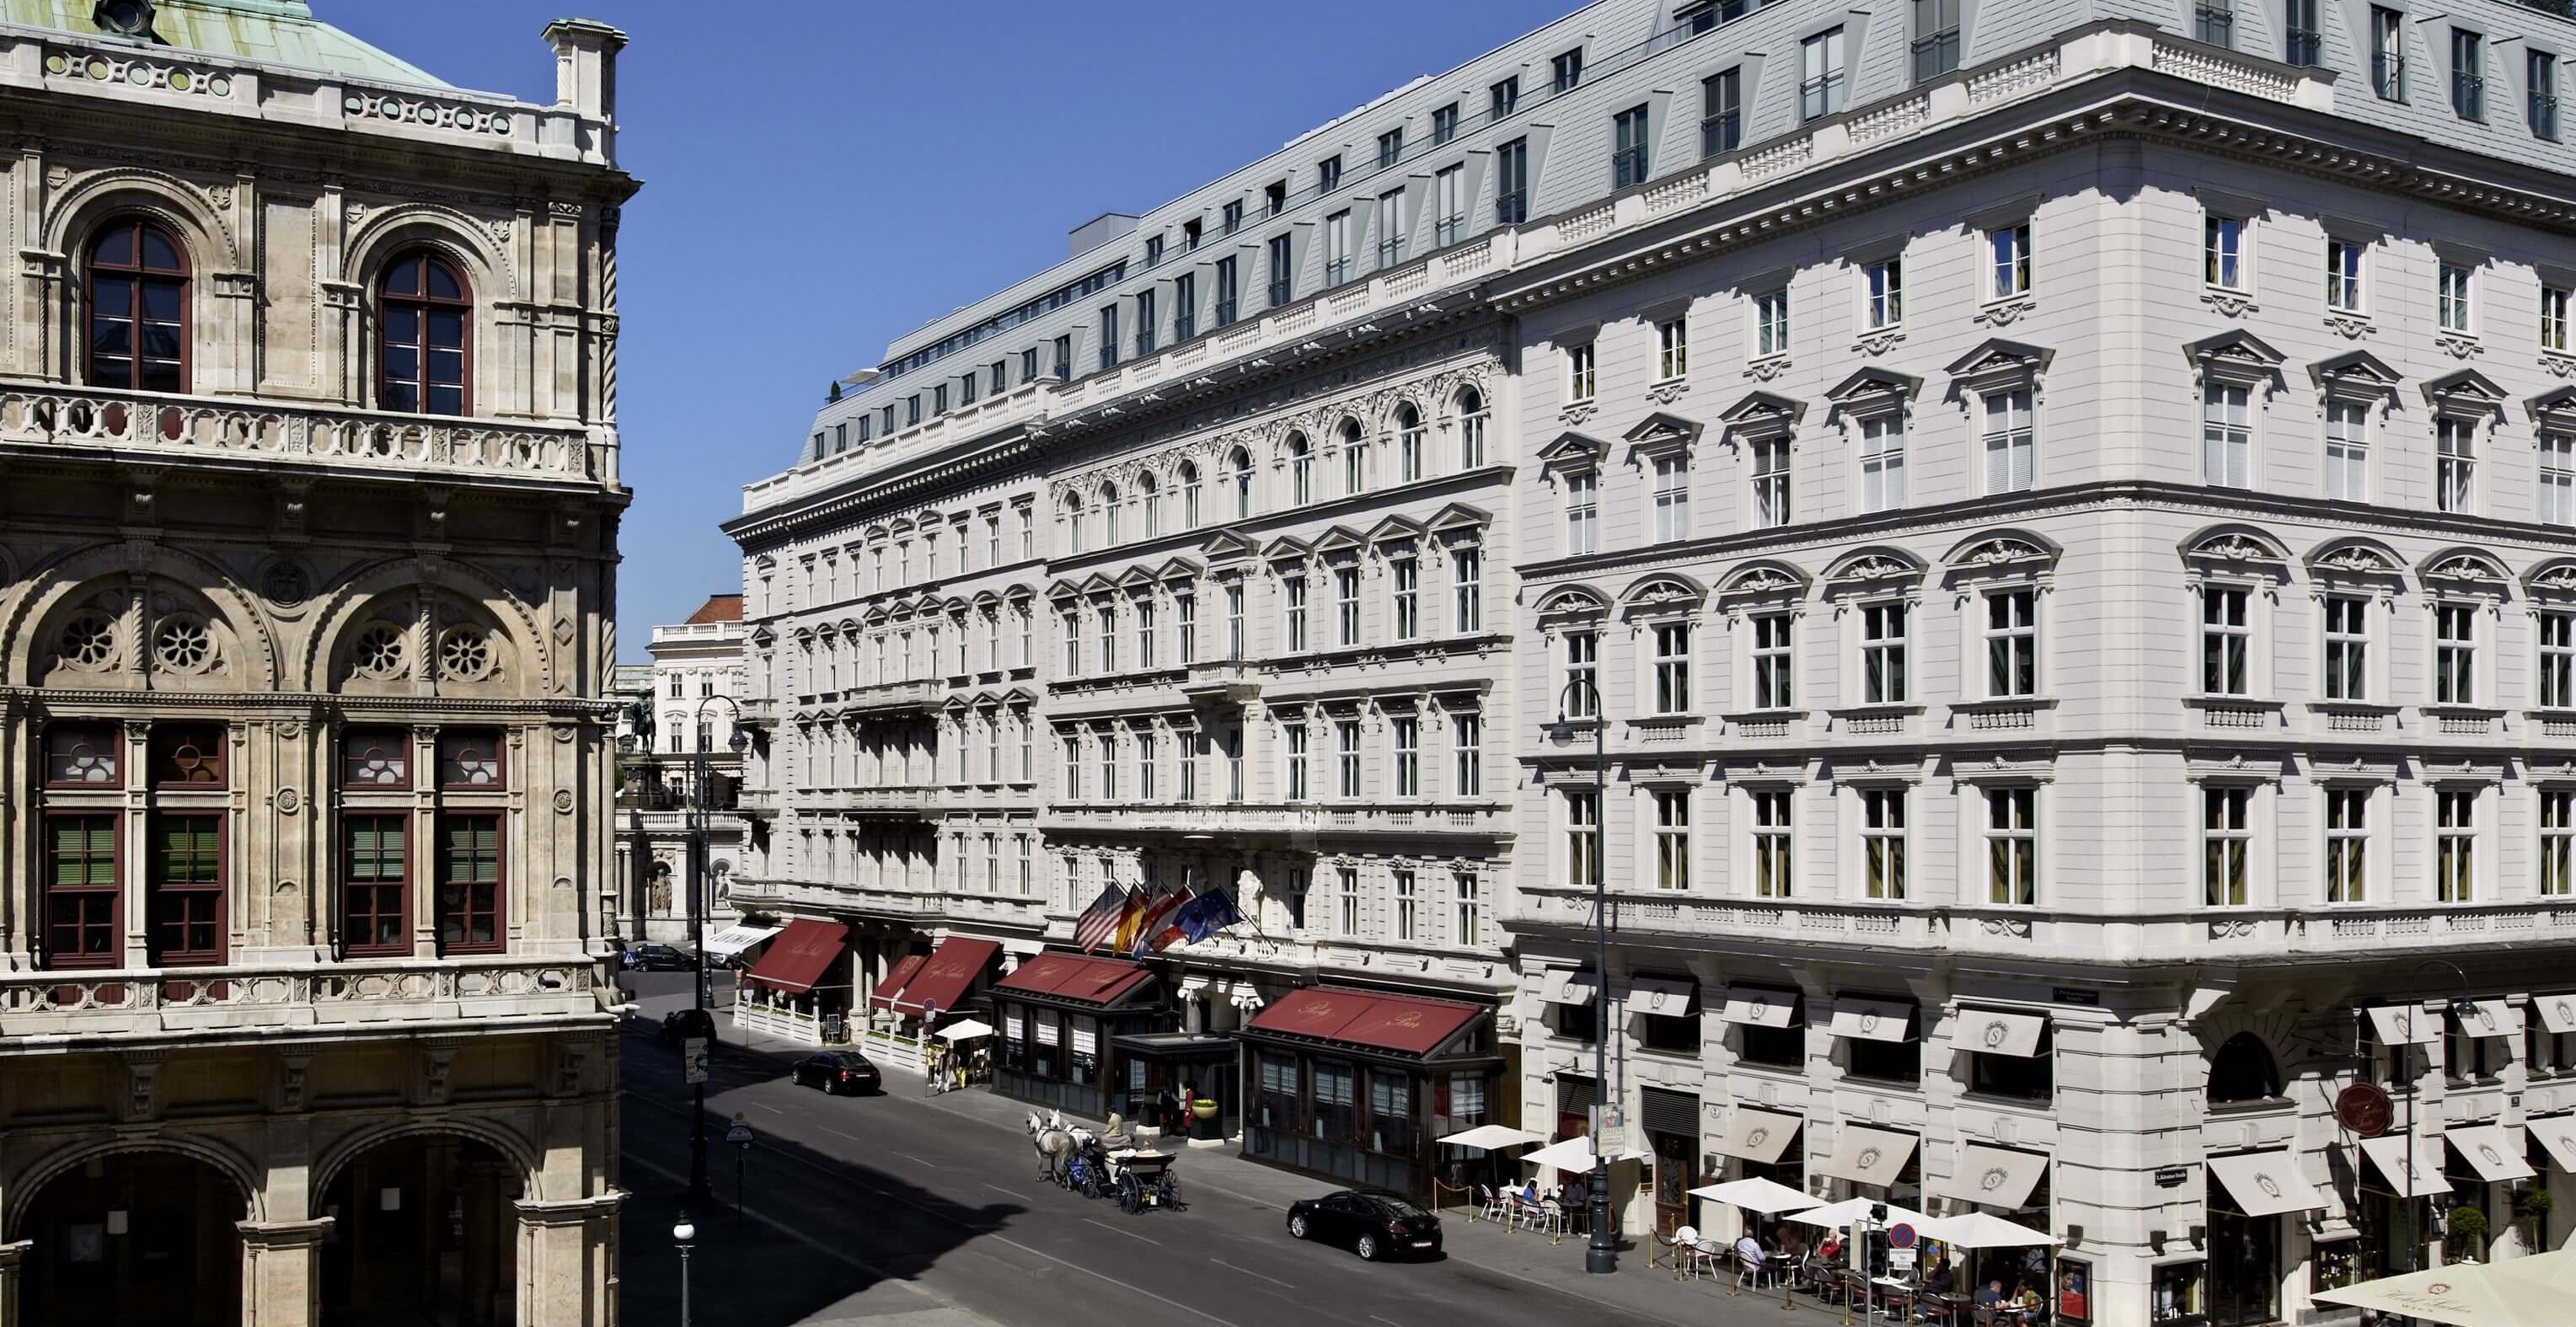 VIENNA HOTEL|ウィーン ホテル